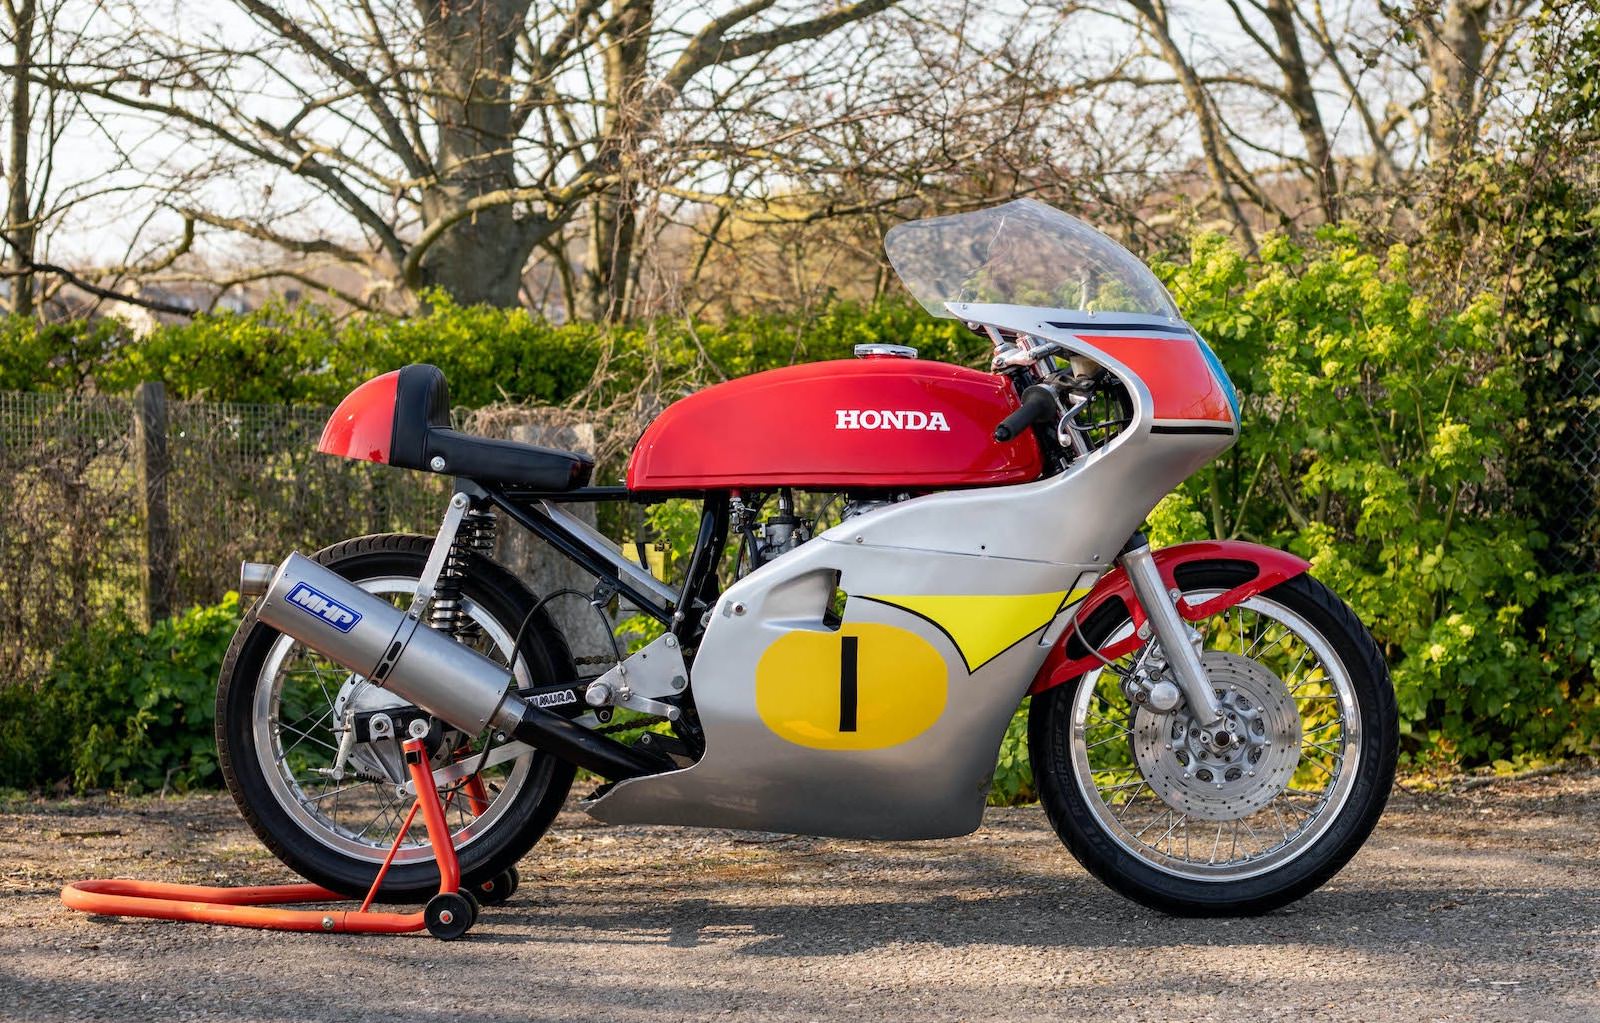 For Sale: A Street-Legal 1977 Honda CB500 Race Bike via @Silodrome